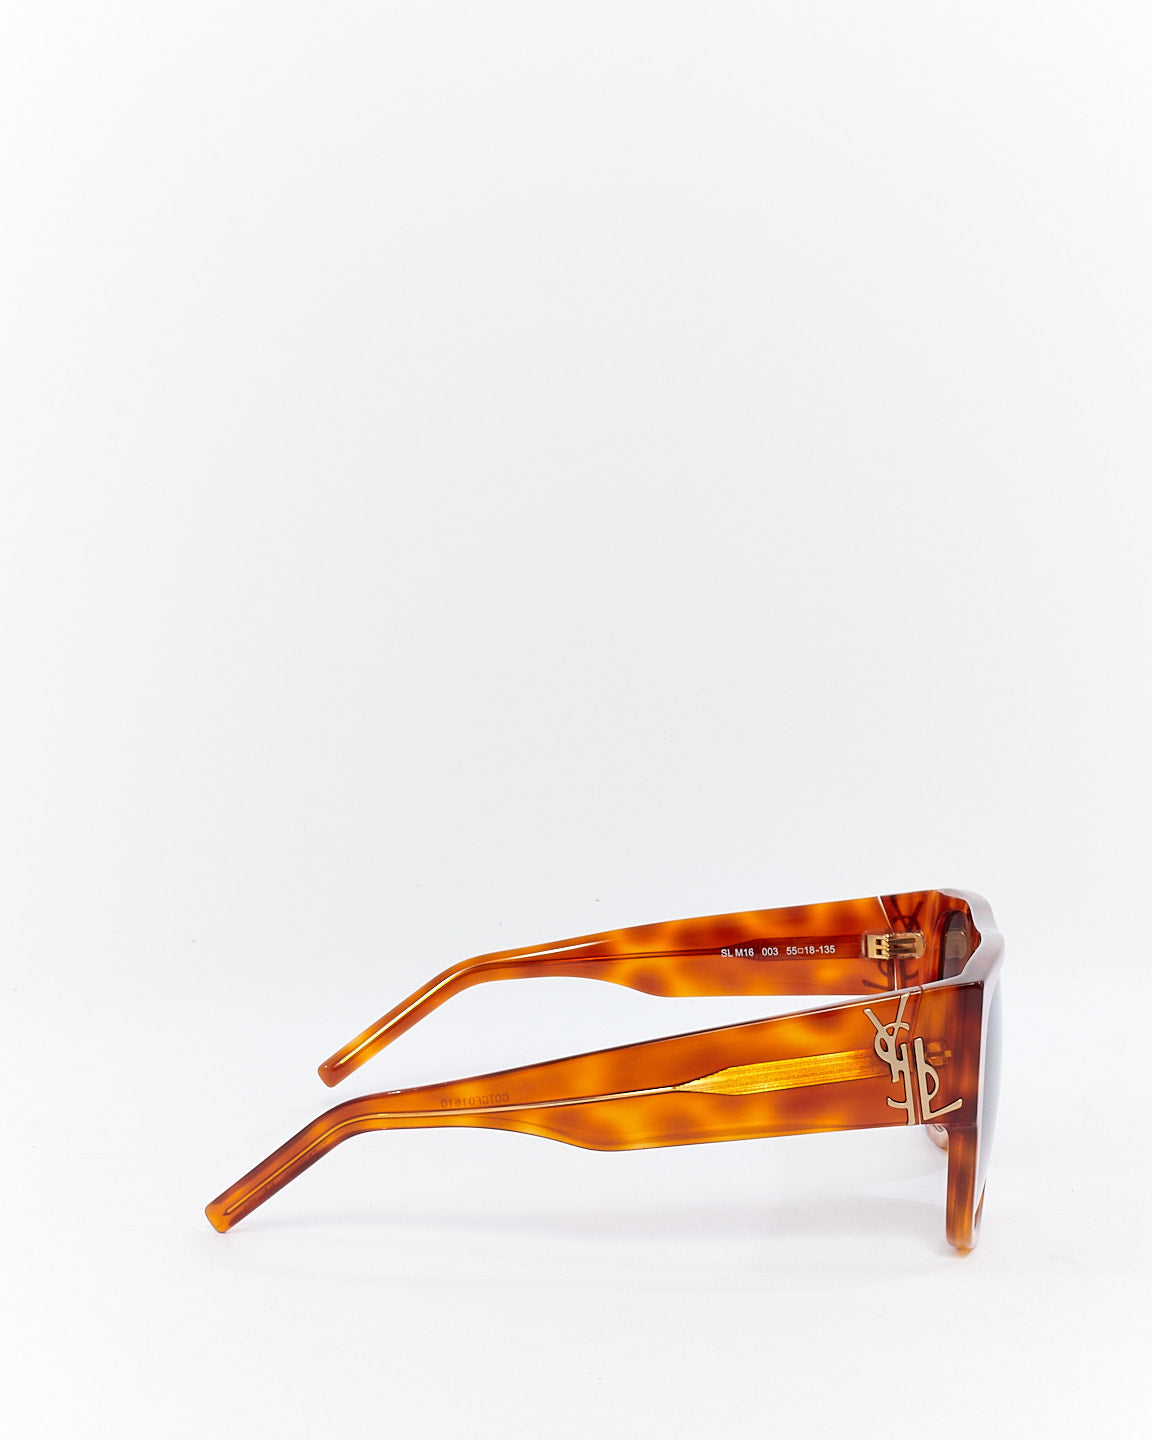 Saint Laurent Brown Tortoise Flat Top Sunglasses SL M16